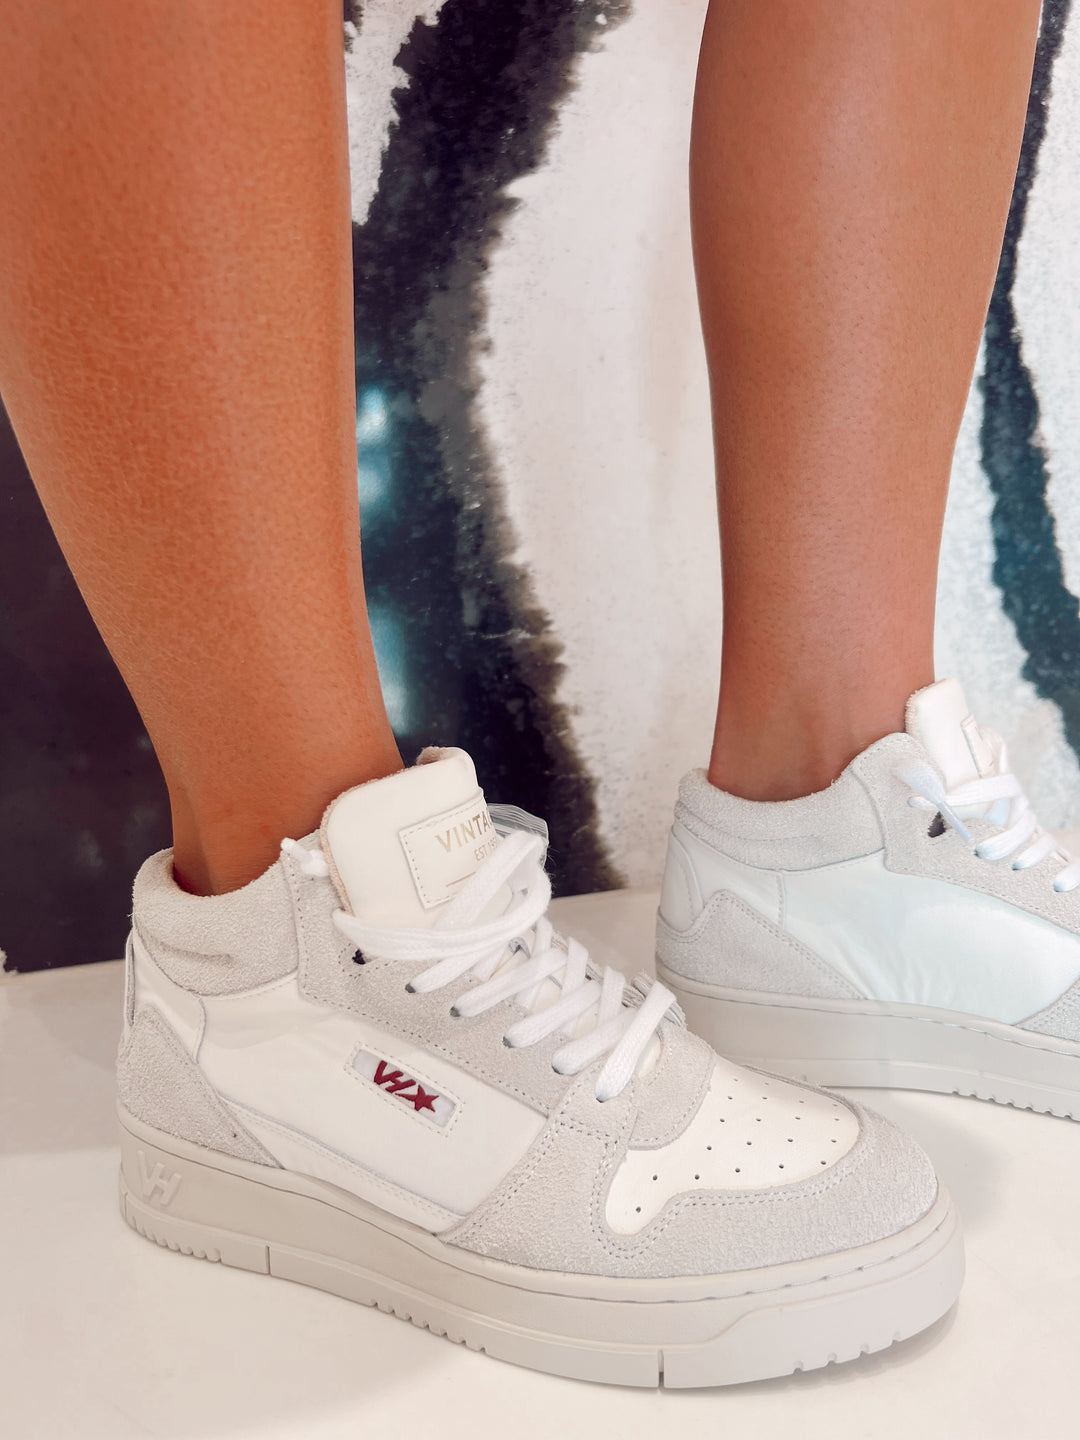 VH Celeste 4 White/Grey Mid Sneakers